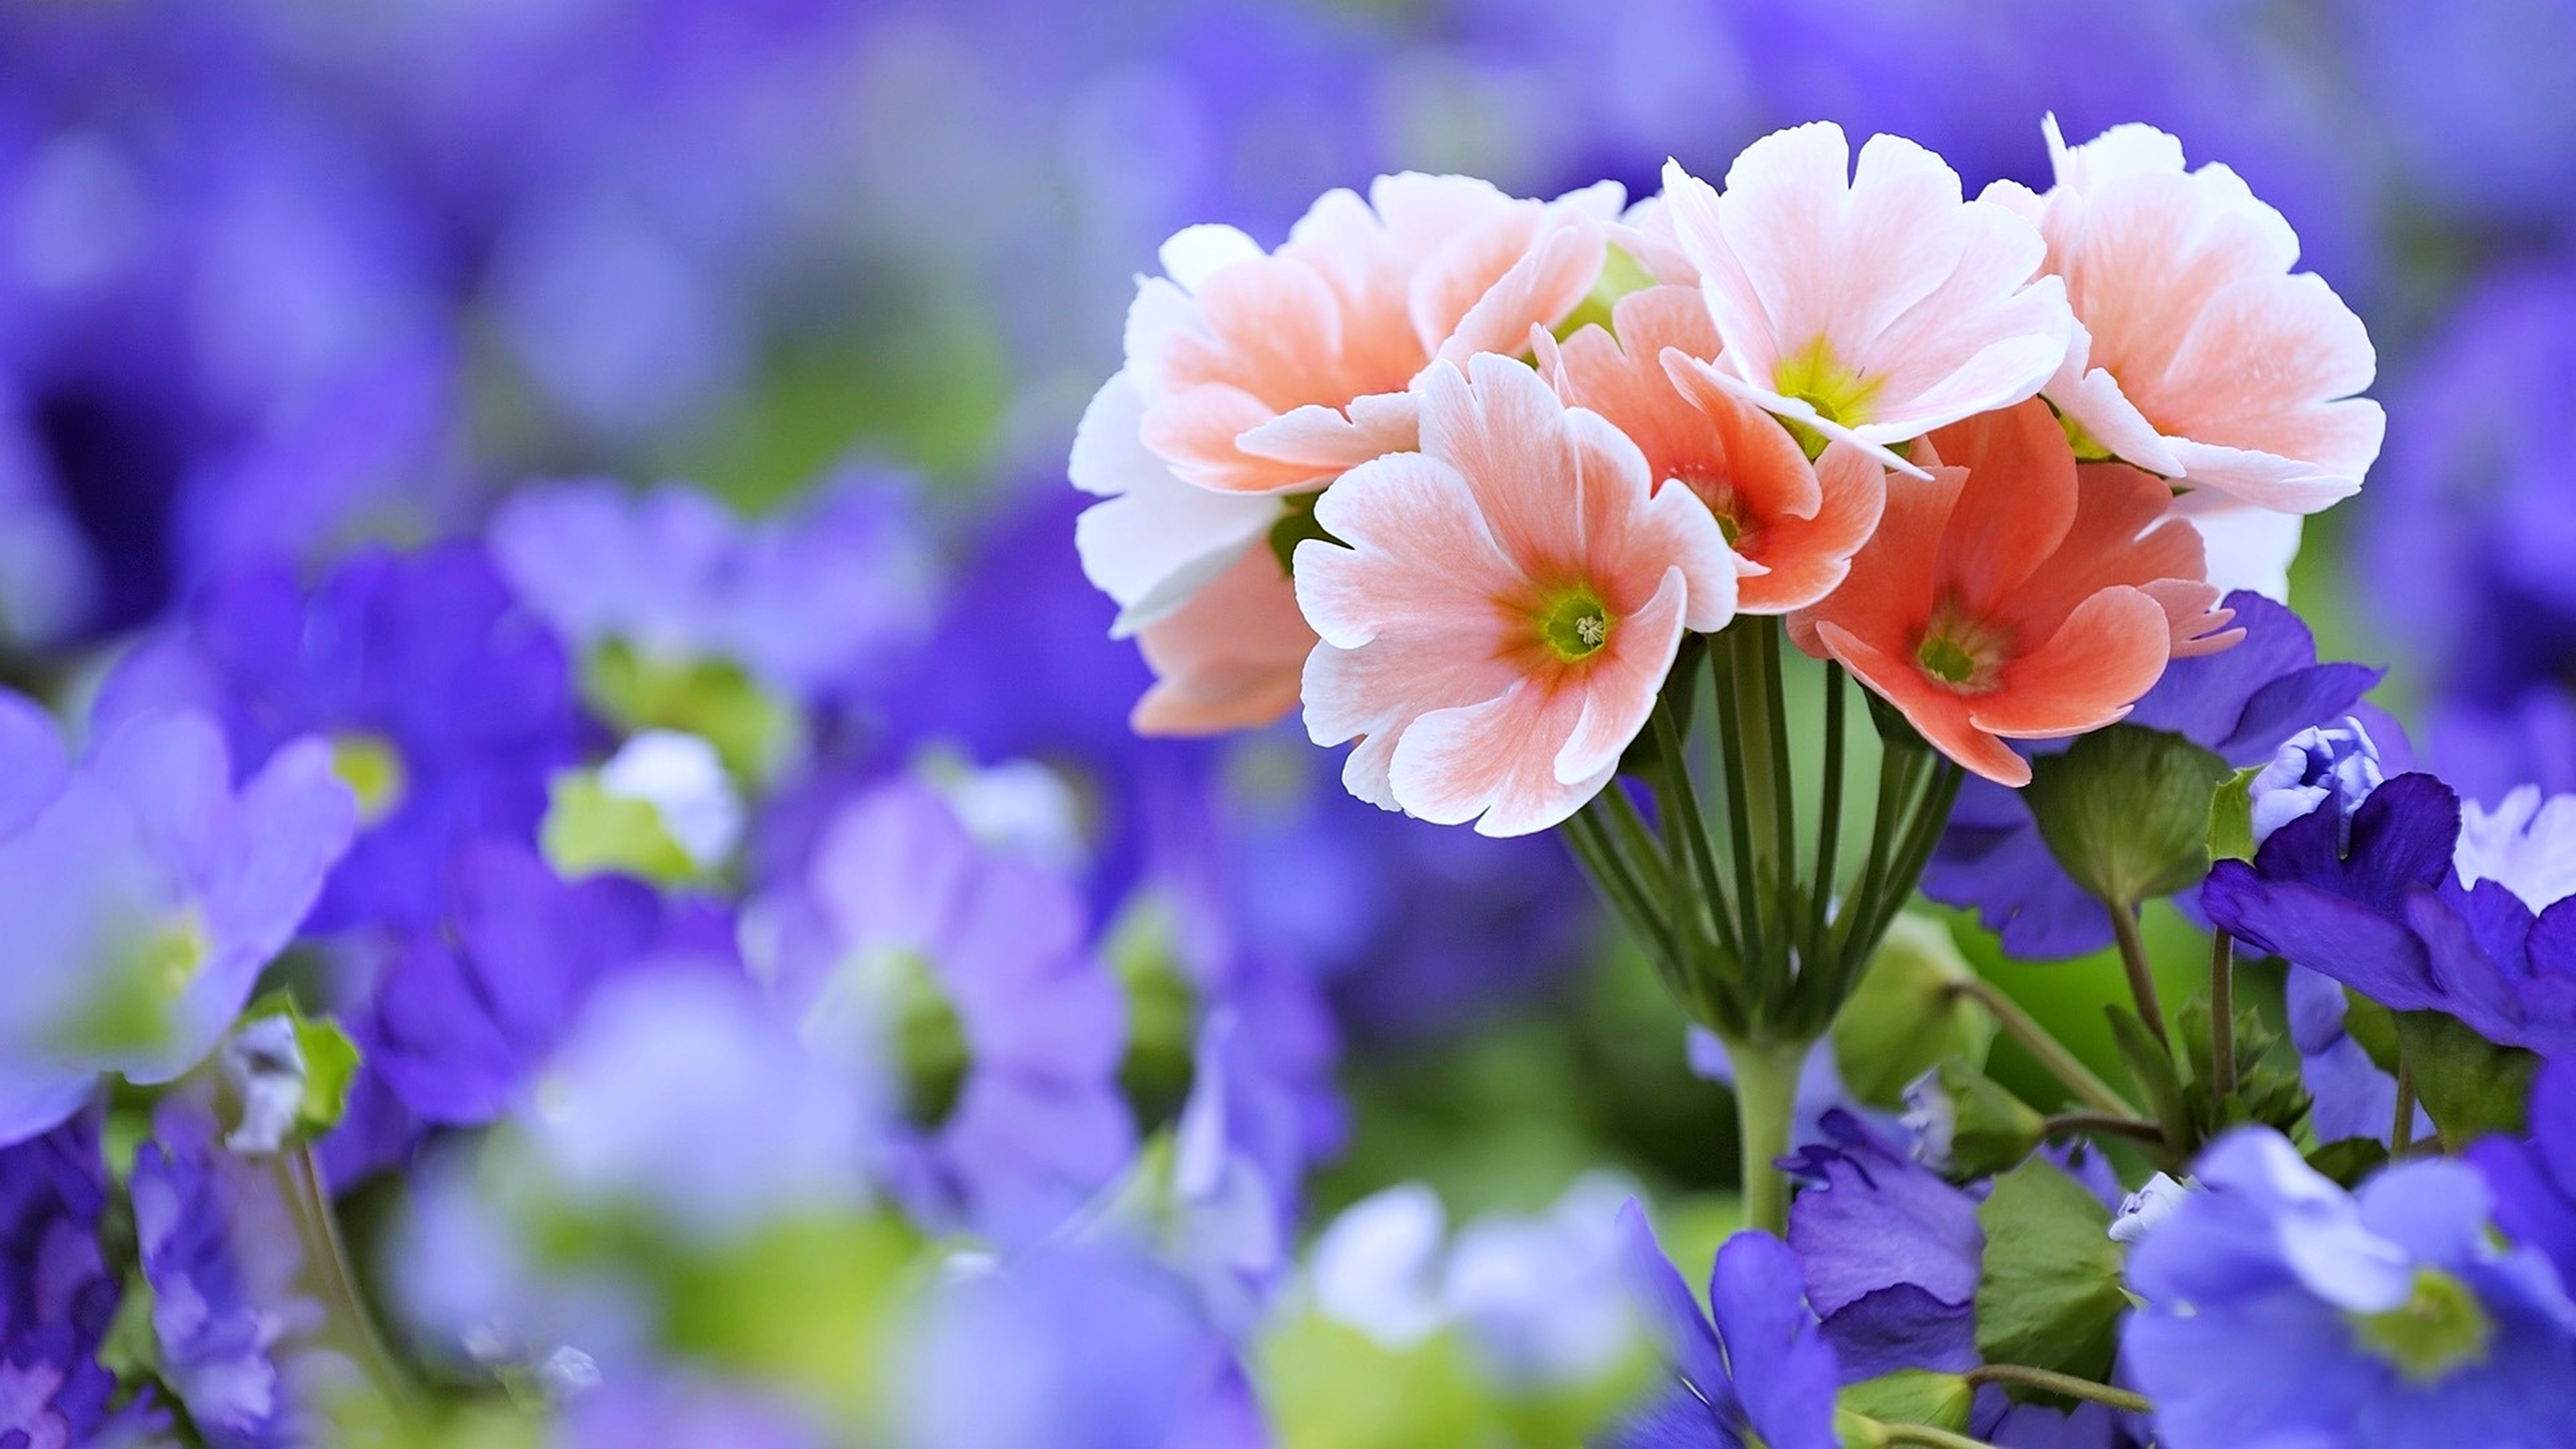 356819 descargar imagen primavera, tierra/naturaleza, naturaleza, flores, flor: fondos de pantalla y protectores de pantalla gratis